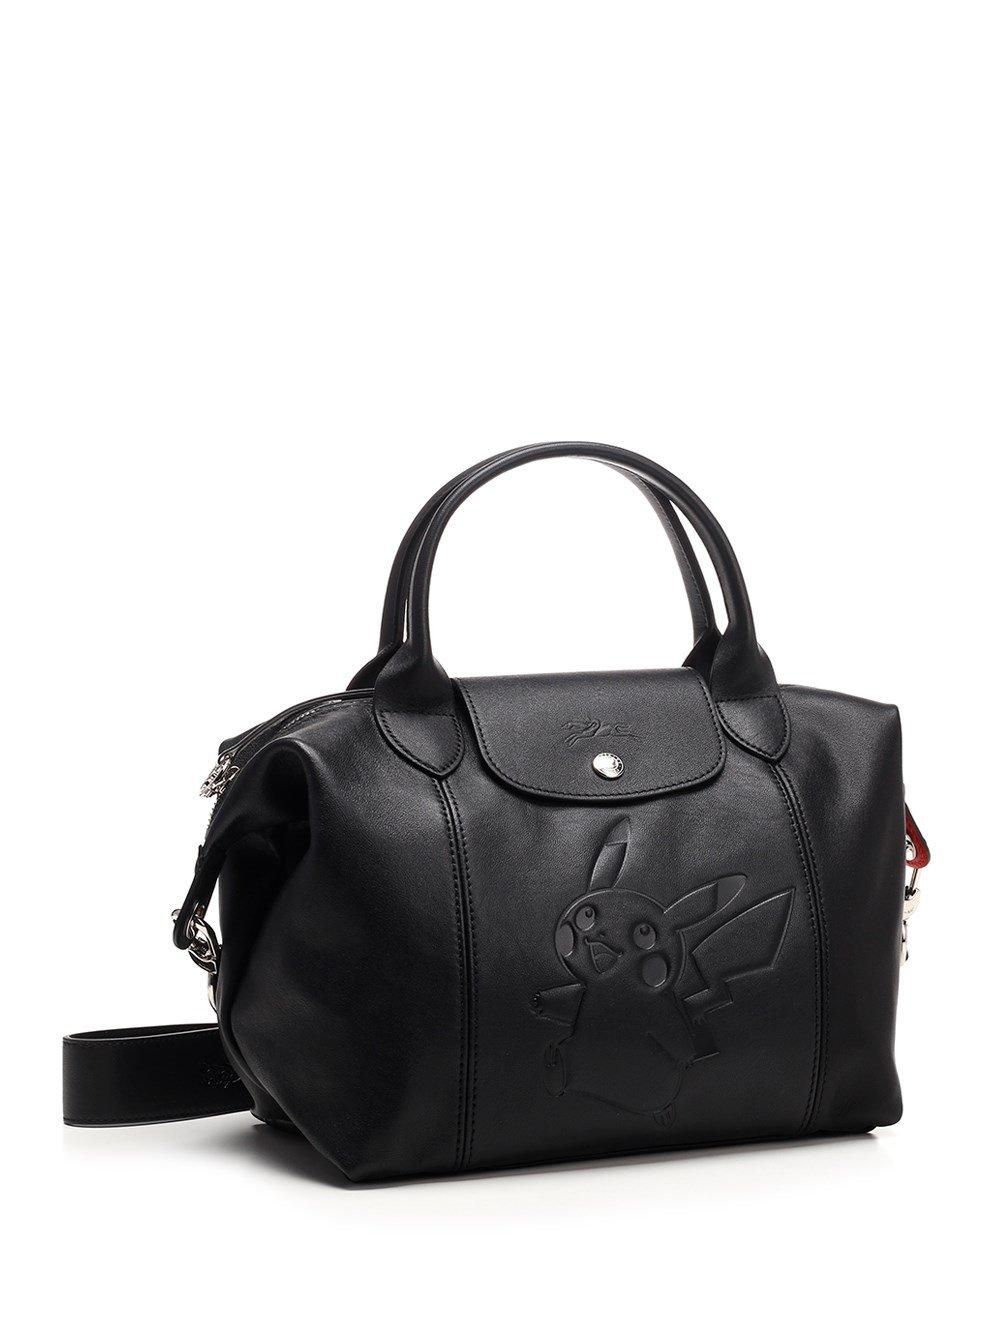 Longchamp X Pokémon Pikachu Embossed Small Tote Bag in Black | Lyst